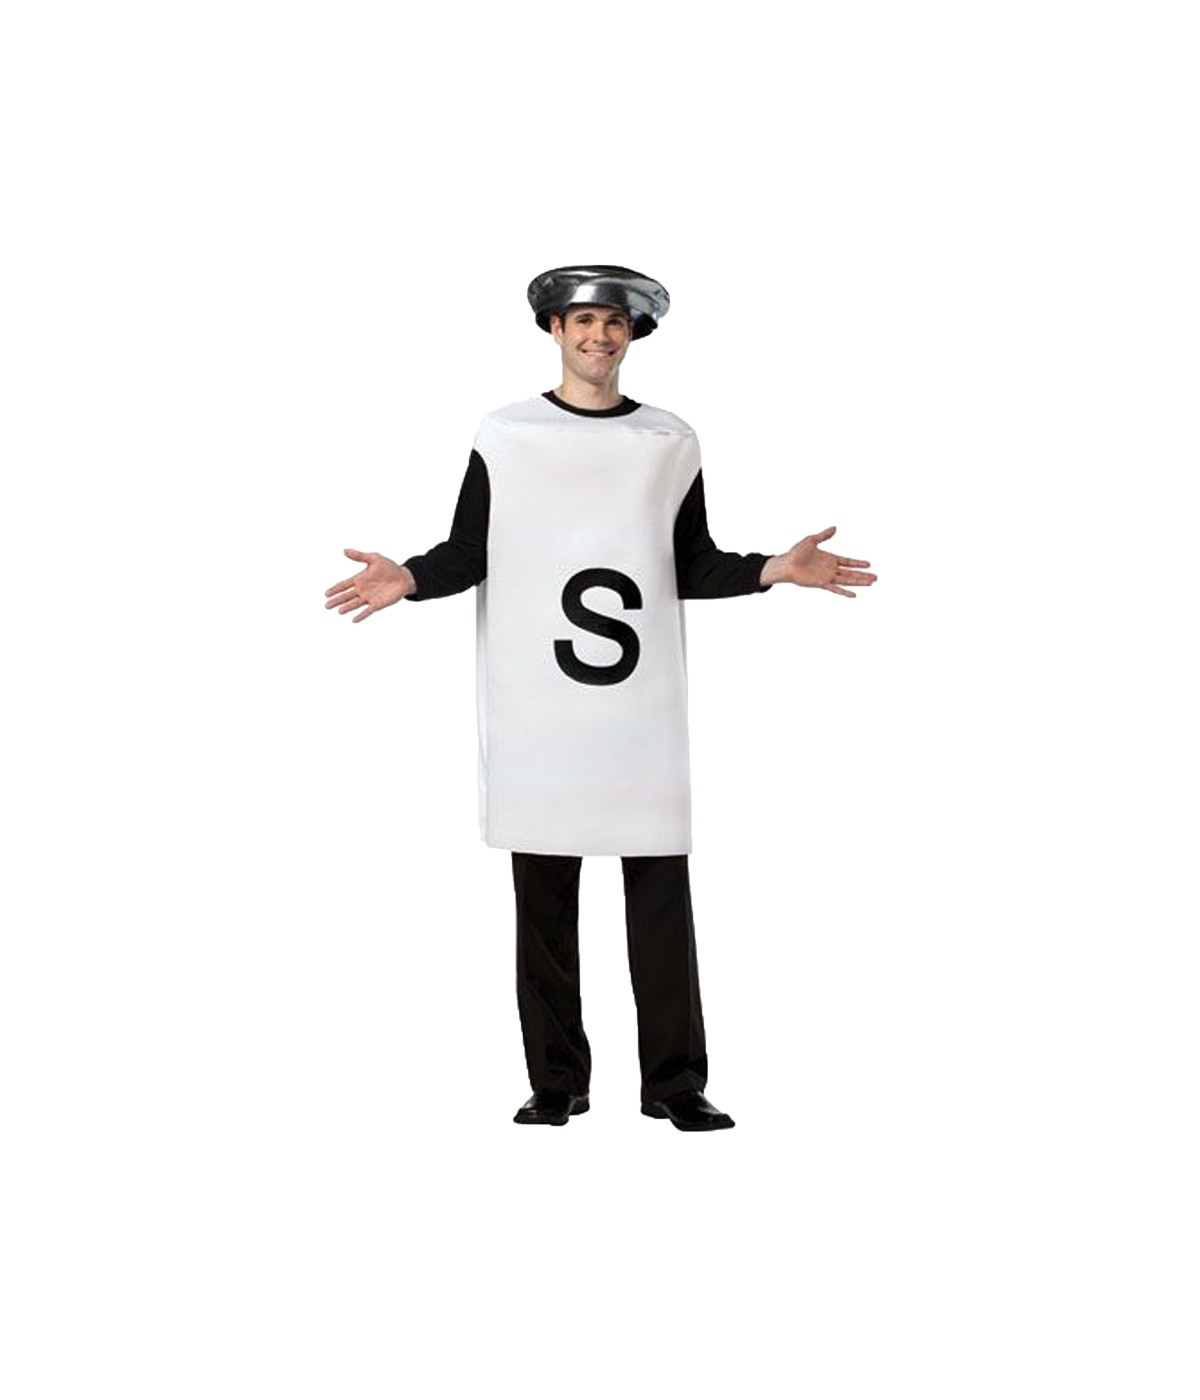  Super Salt Shaker Costume